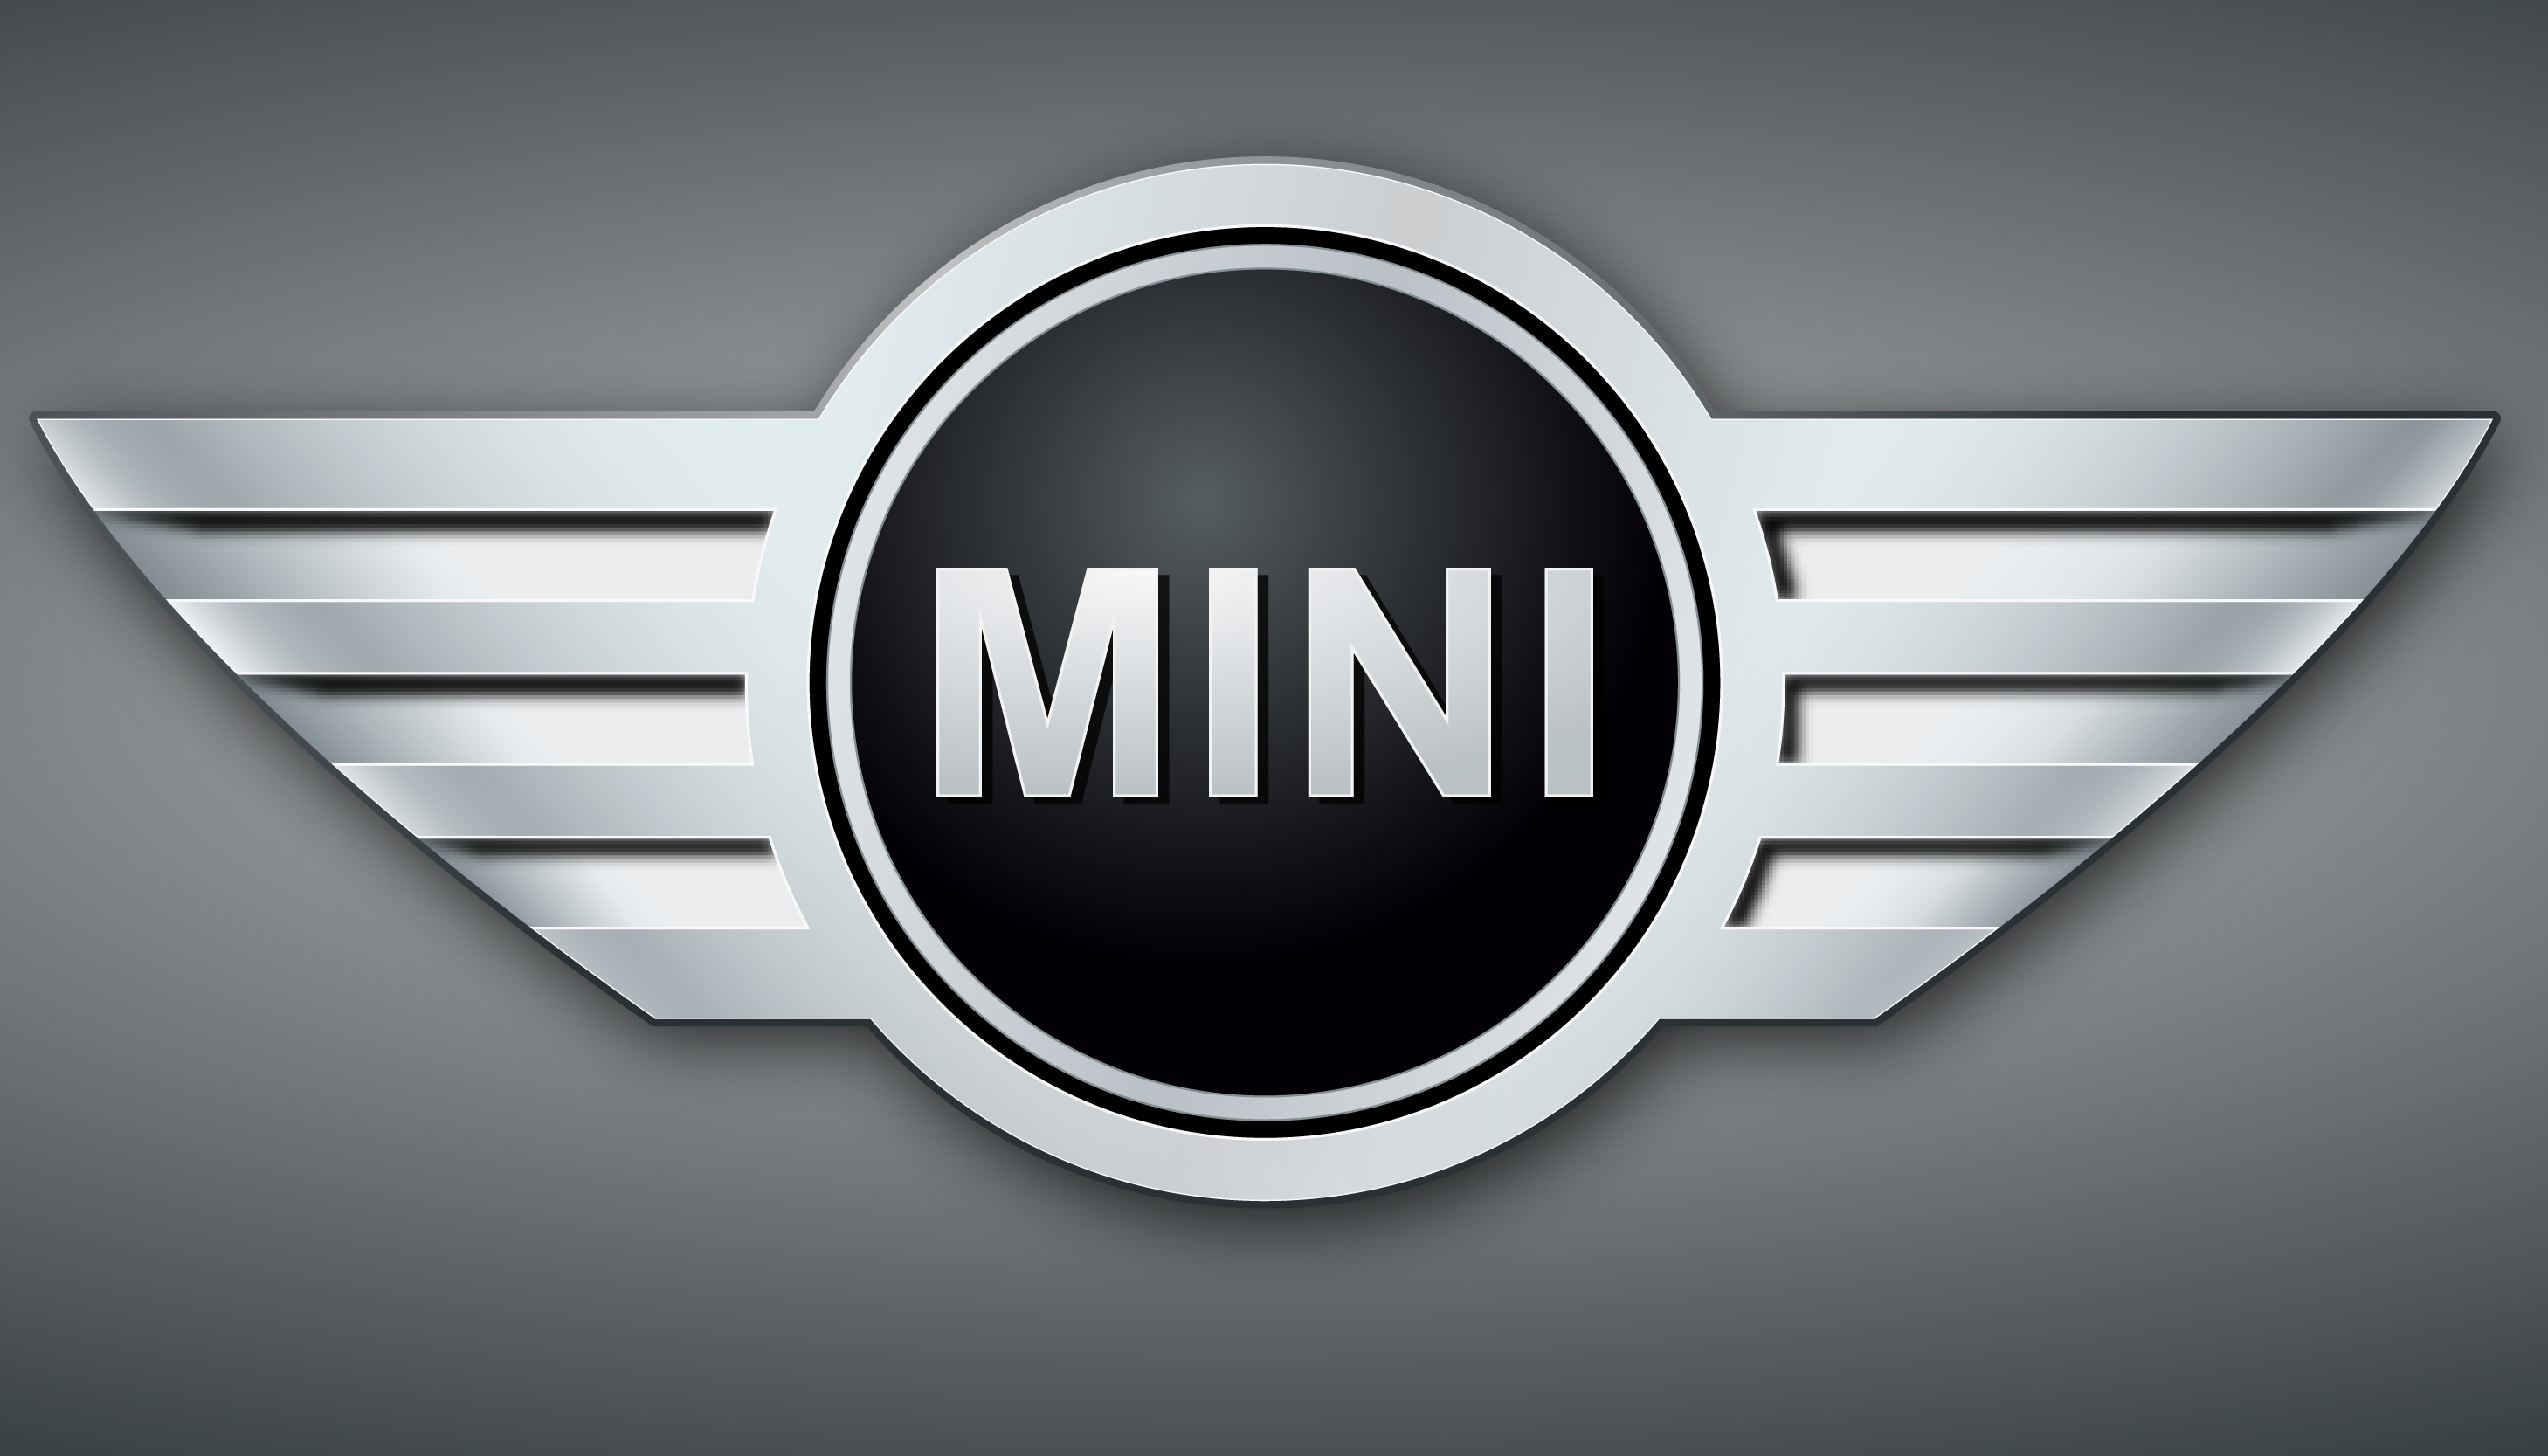 MINI Cooper S Logo Rover Company, mini, text, logo png | PNGEgg